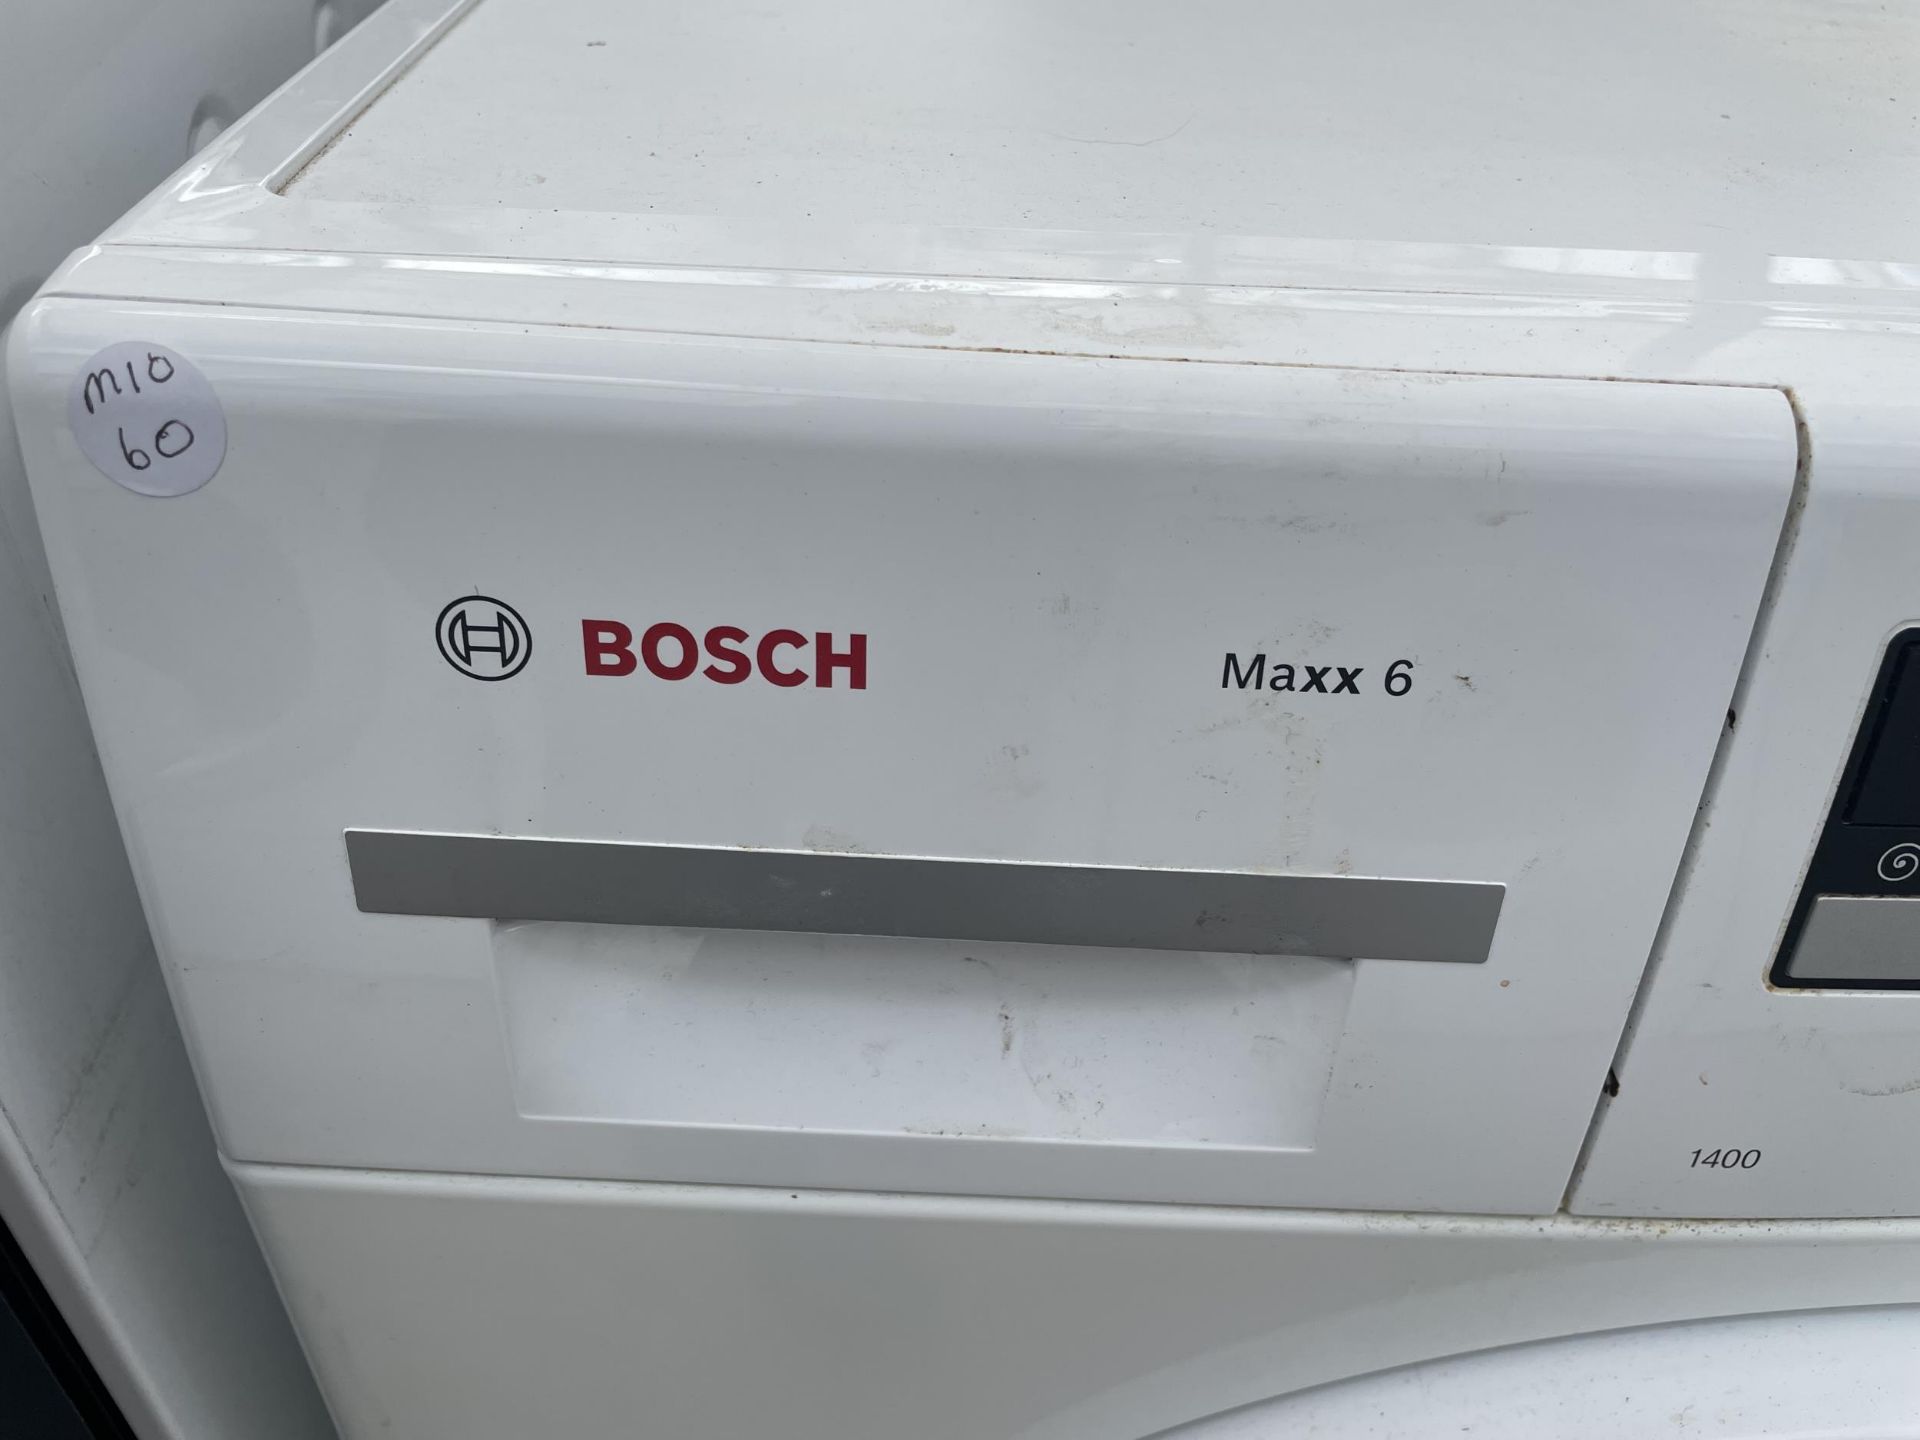 A WHITE BOSCH MAXX6 WASHING MACHINE - Image 2 of 3